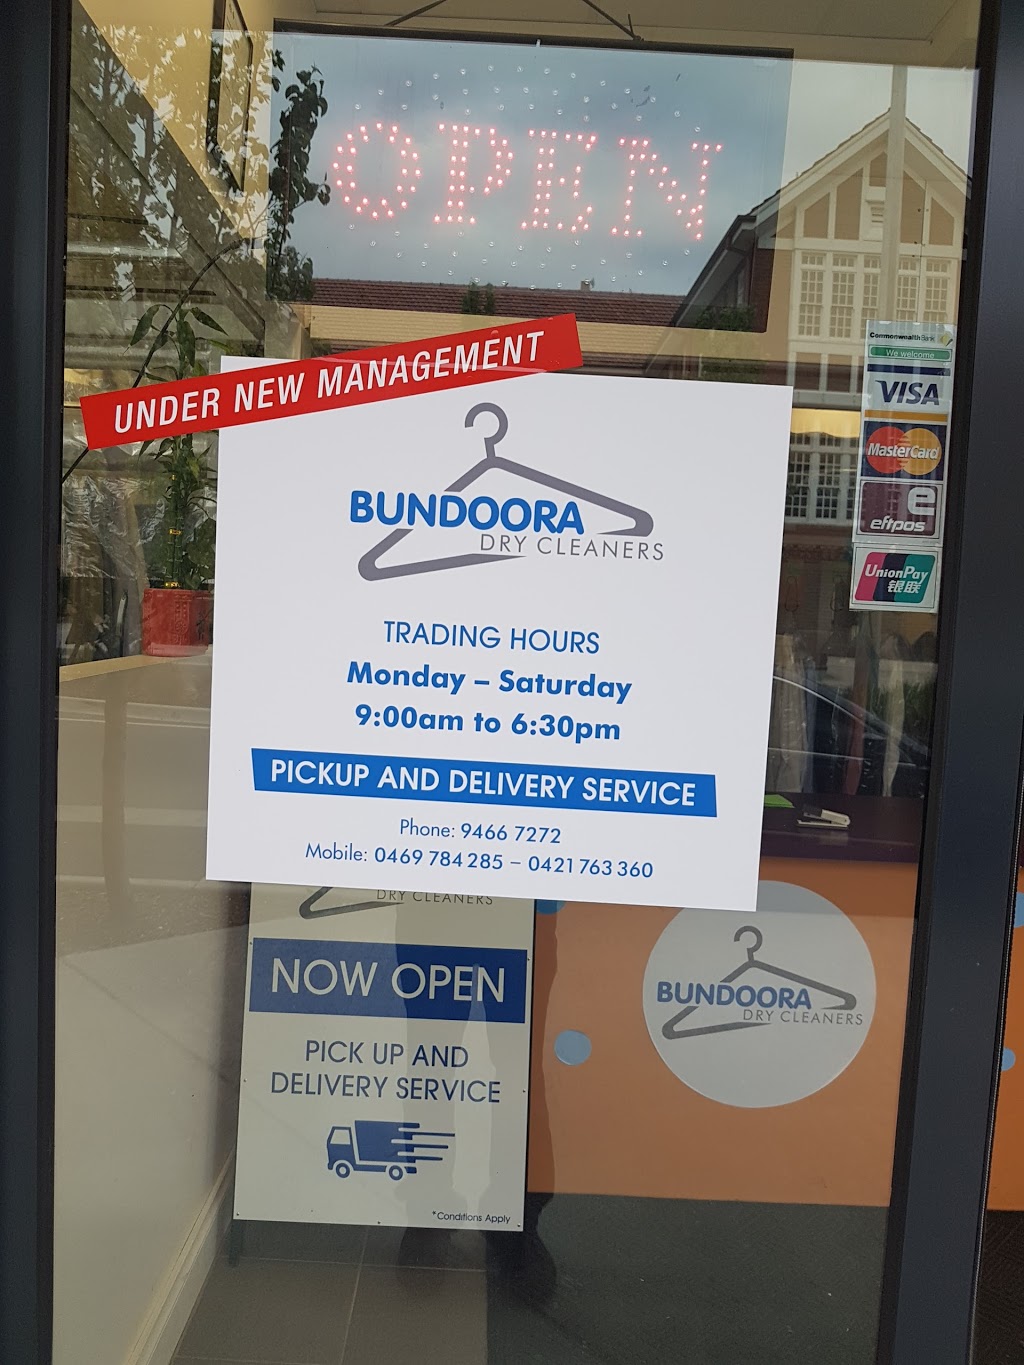 Bundoora Dry Cleaners | shop e1/24 Copernicus Cres, Bundoora VIC 3083, Australia | Phone: (03) 9077 0016